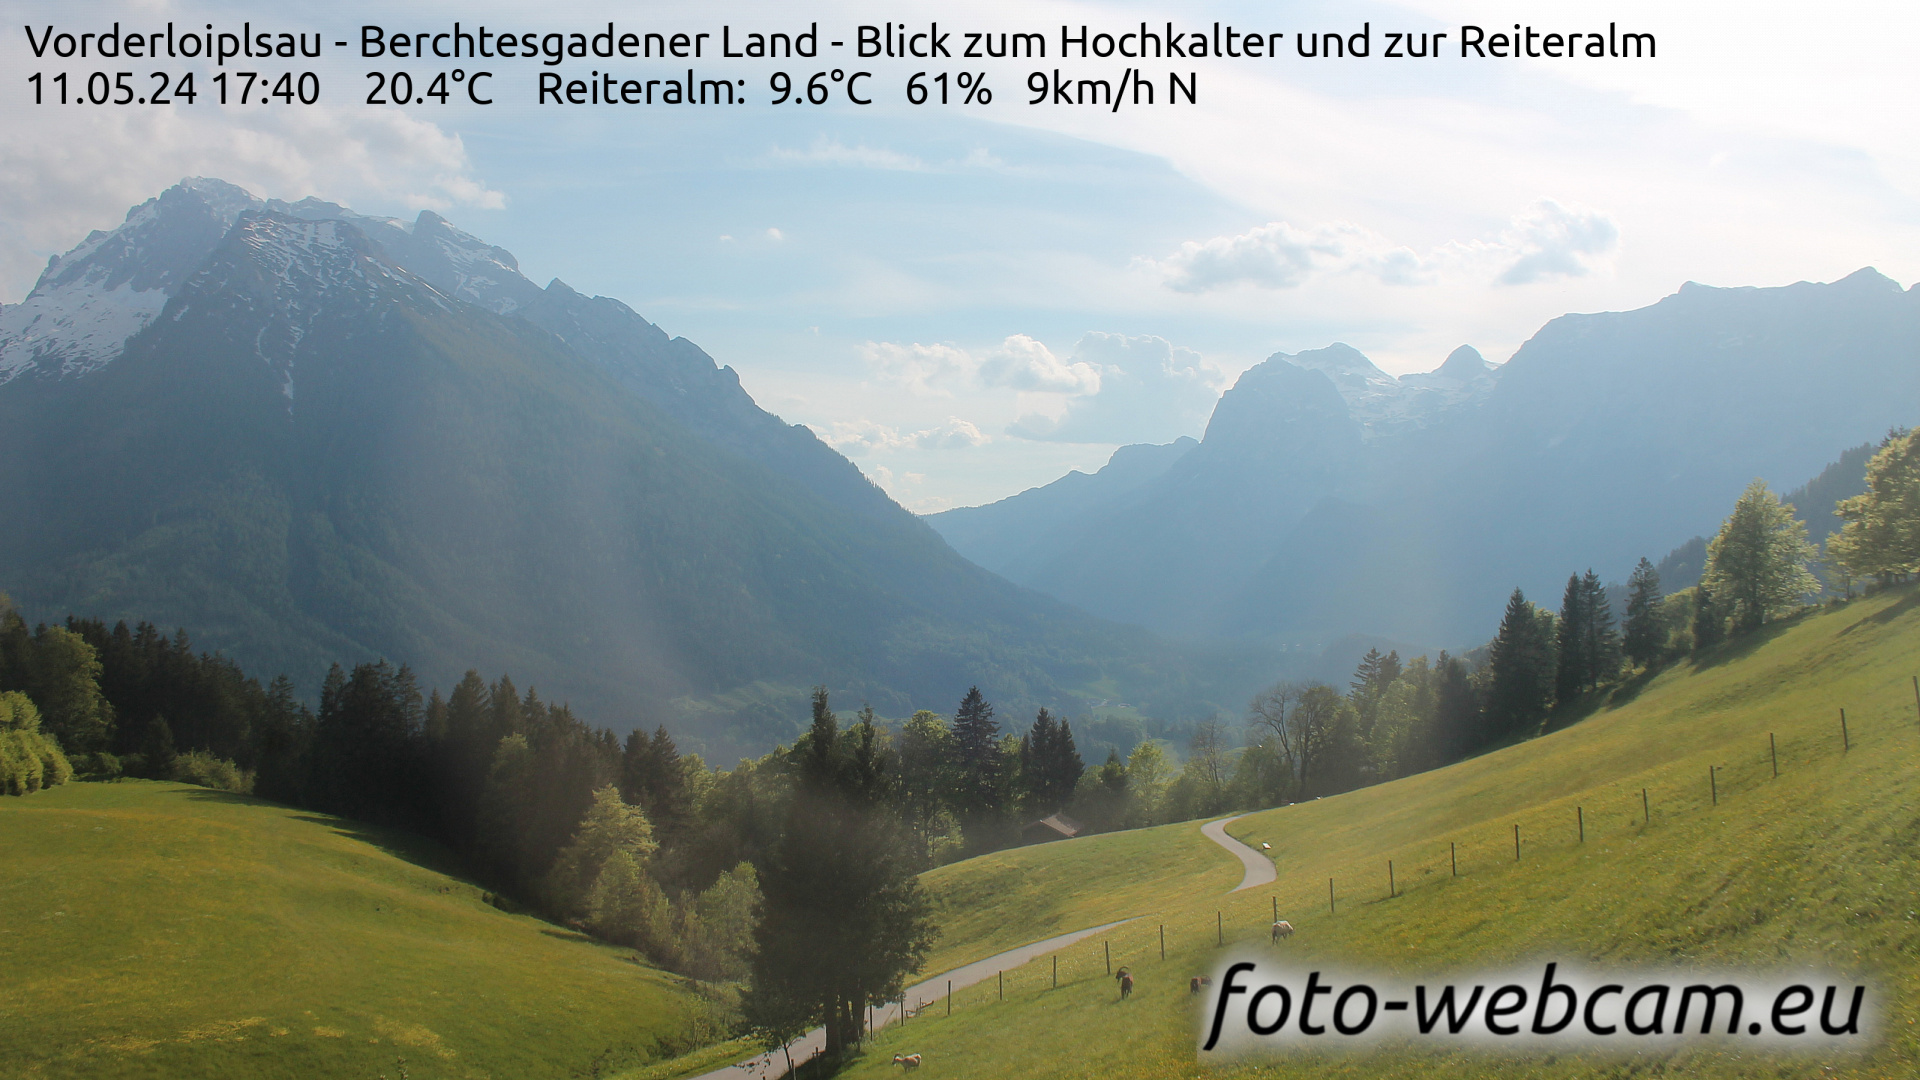 Ramsau bei Berchtesgaden Mi. 17:48